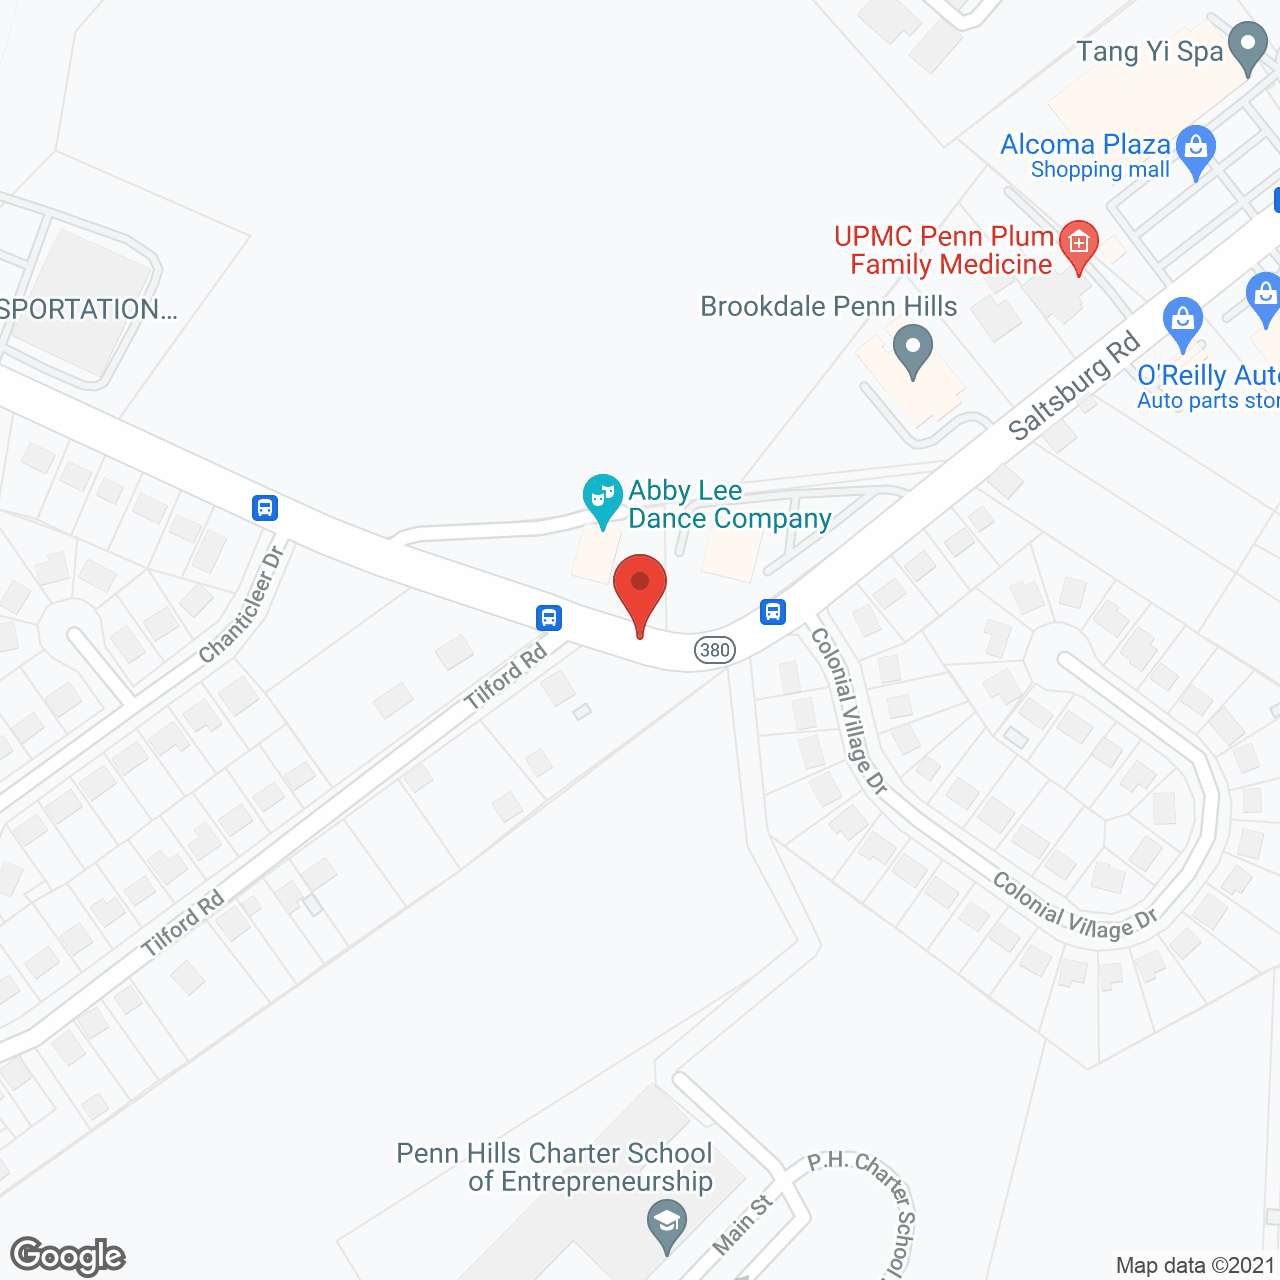 Brookdale Penn Hills in google map